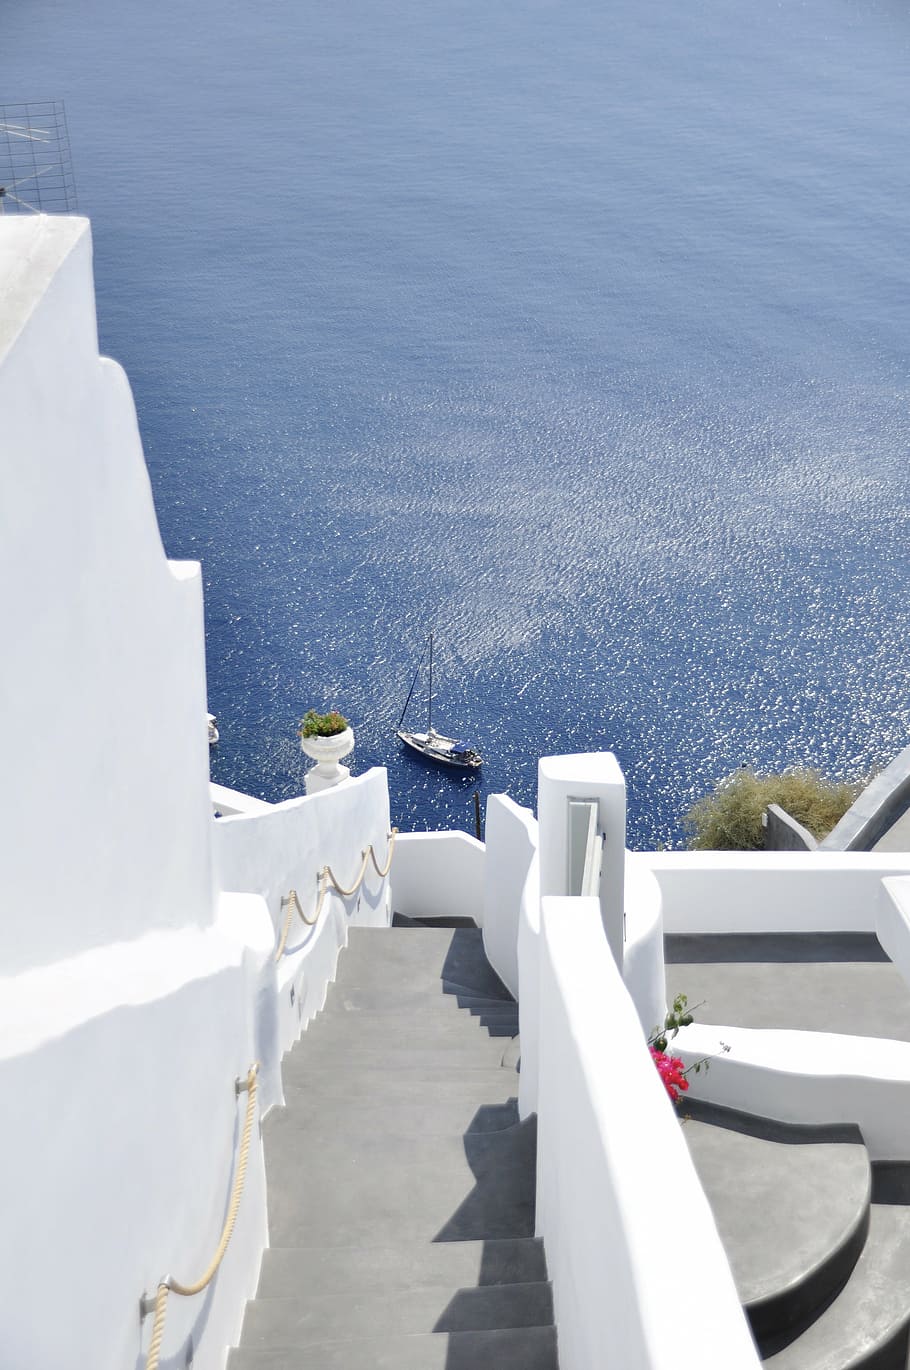 staircase building, sea, boat, daytime, steps water sea, greece, santorini, mediterranean, water, nature